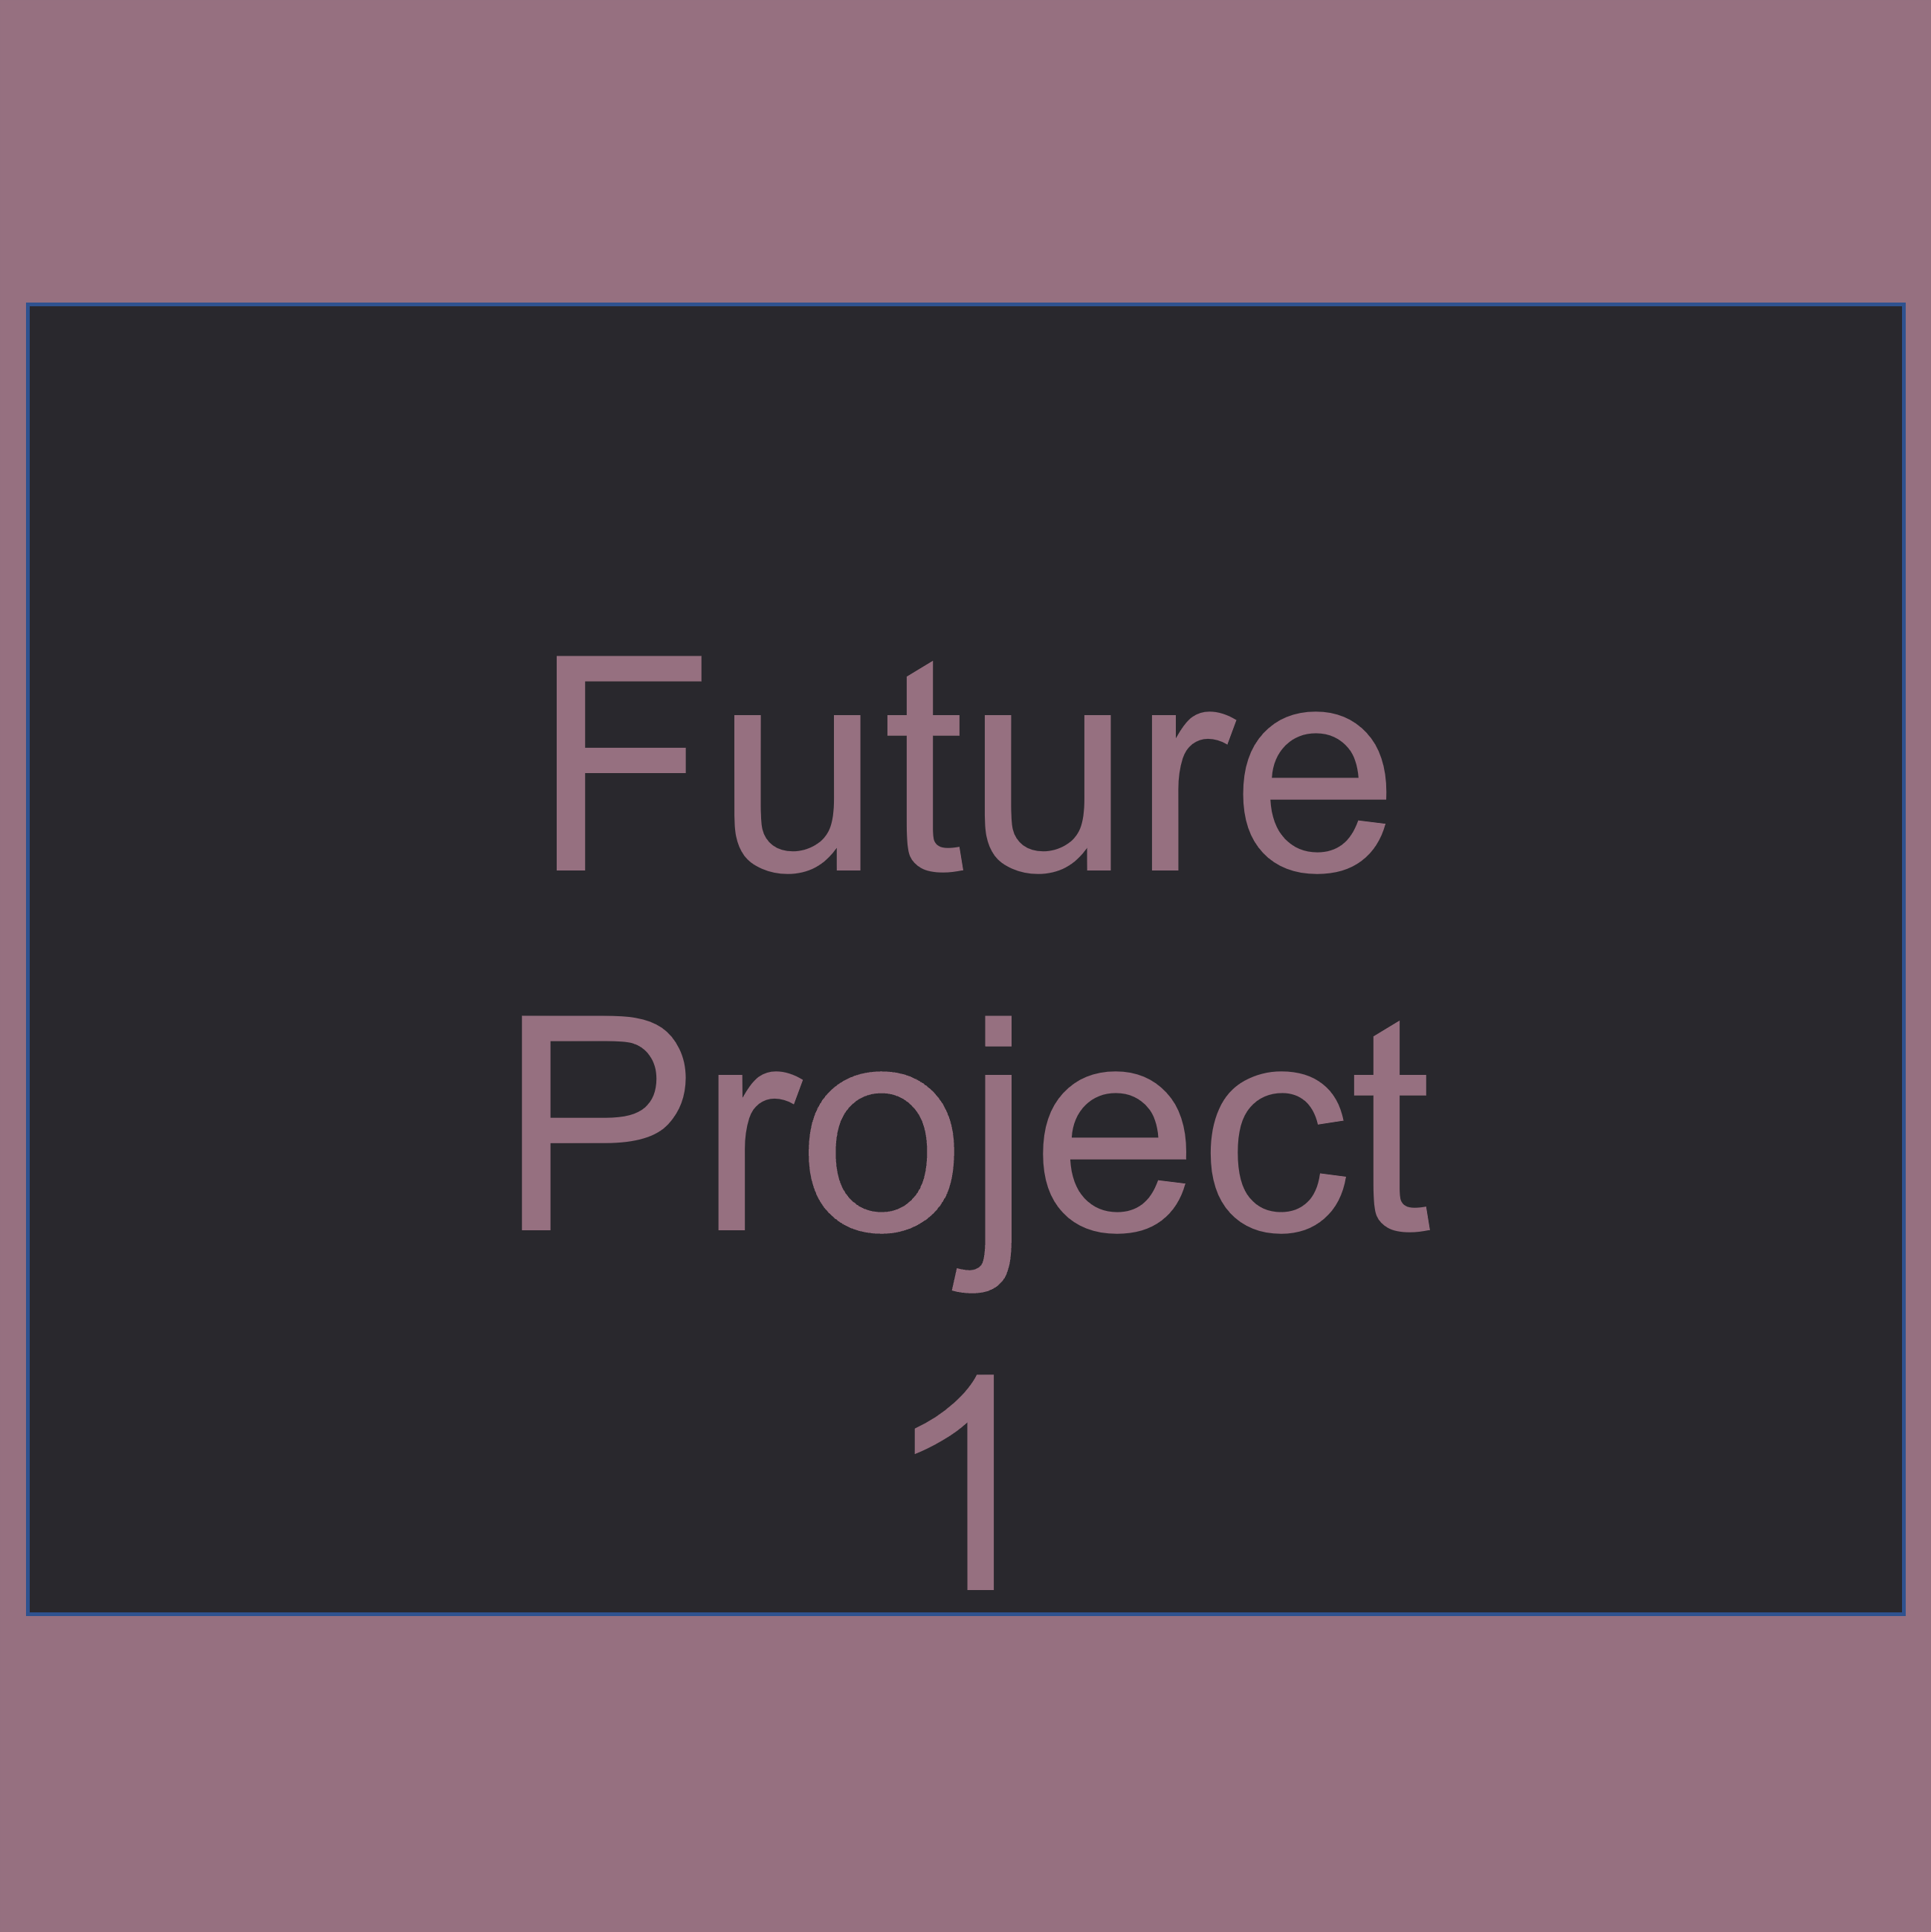 Future project